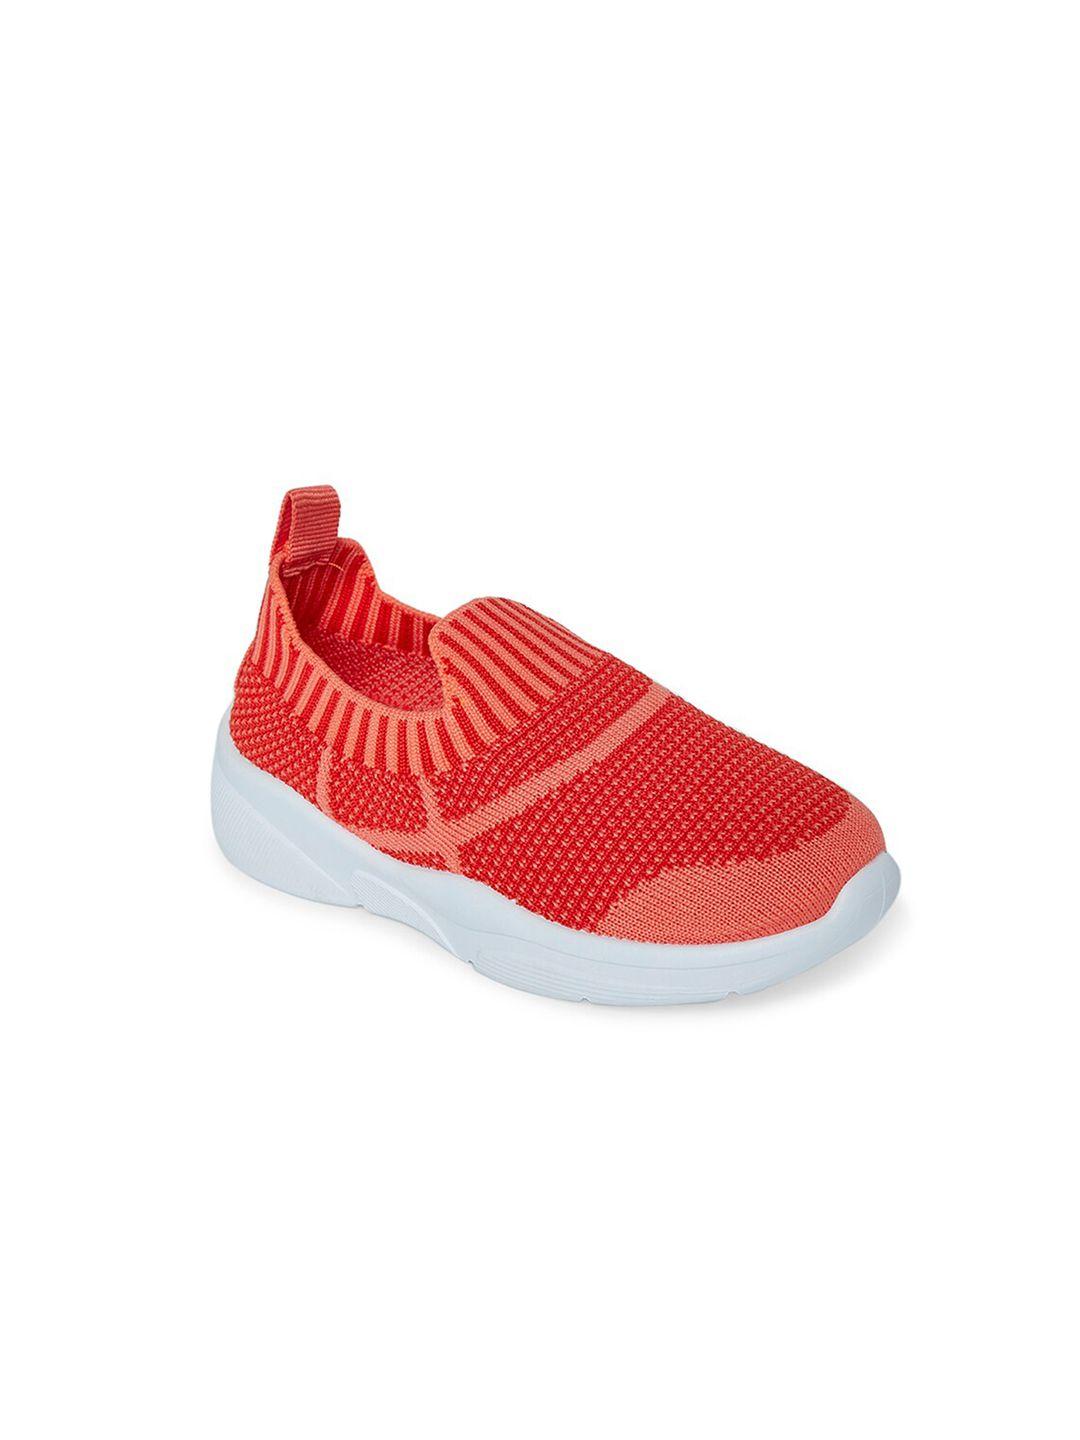 pantaloons-junior-girls-red-textile-running-non-marking-shoes